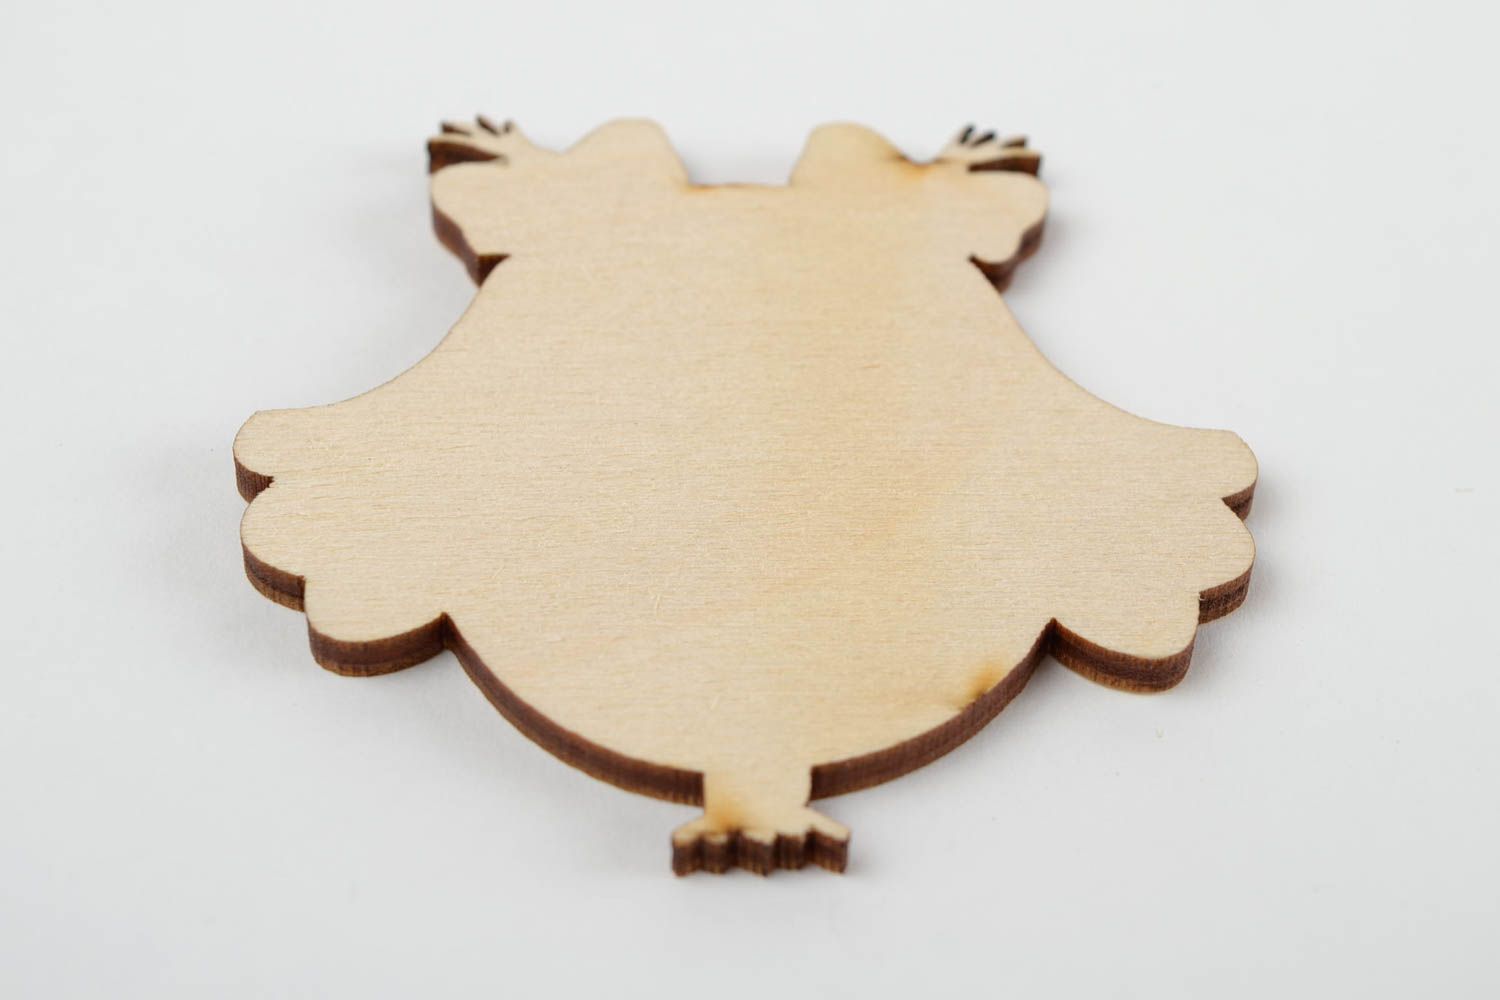 Handmade designer wooden blank unusual goods for creativity art supplies photo 5